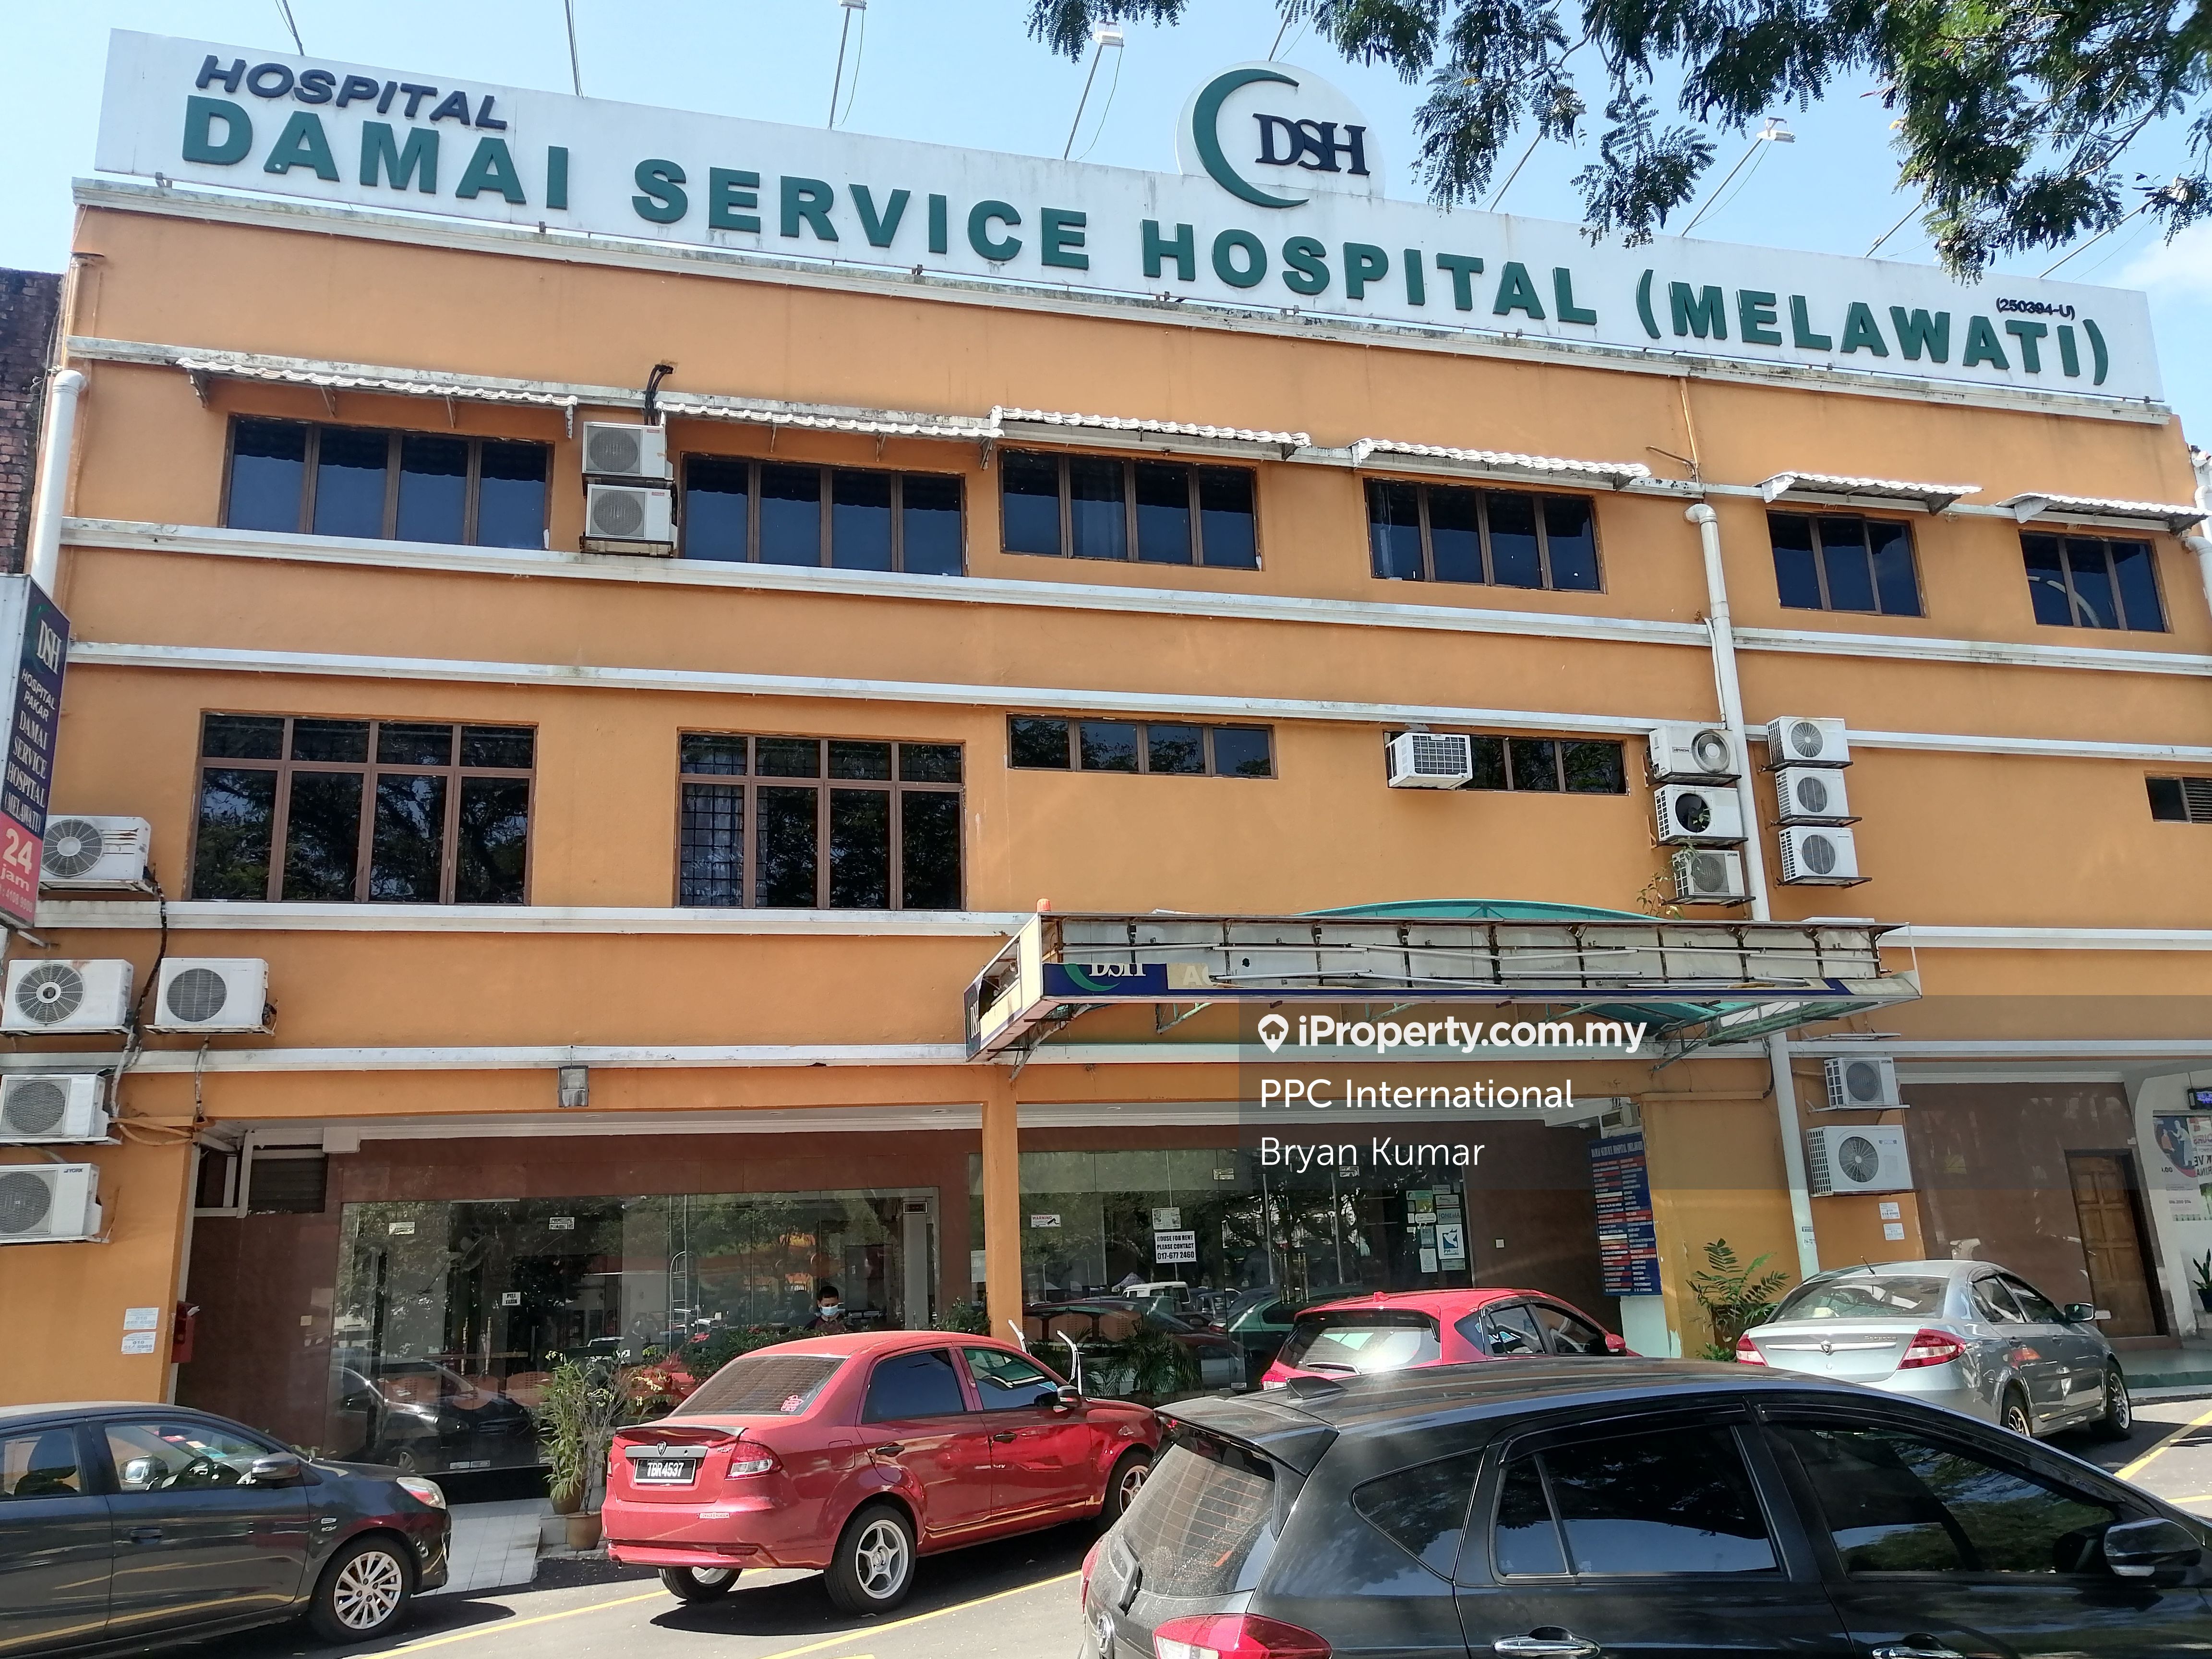 Damai service hospital melawati